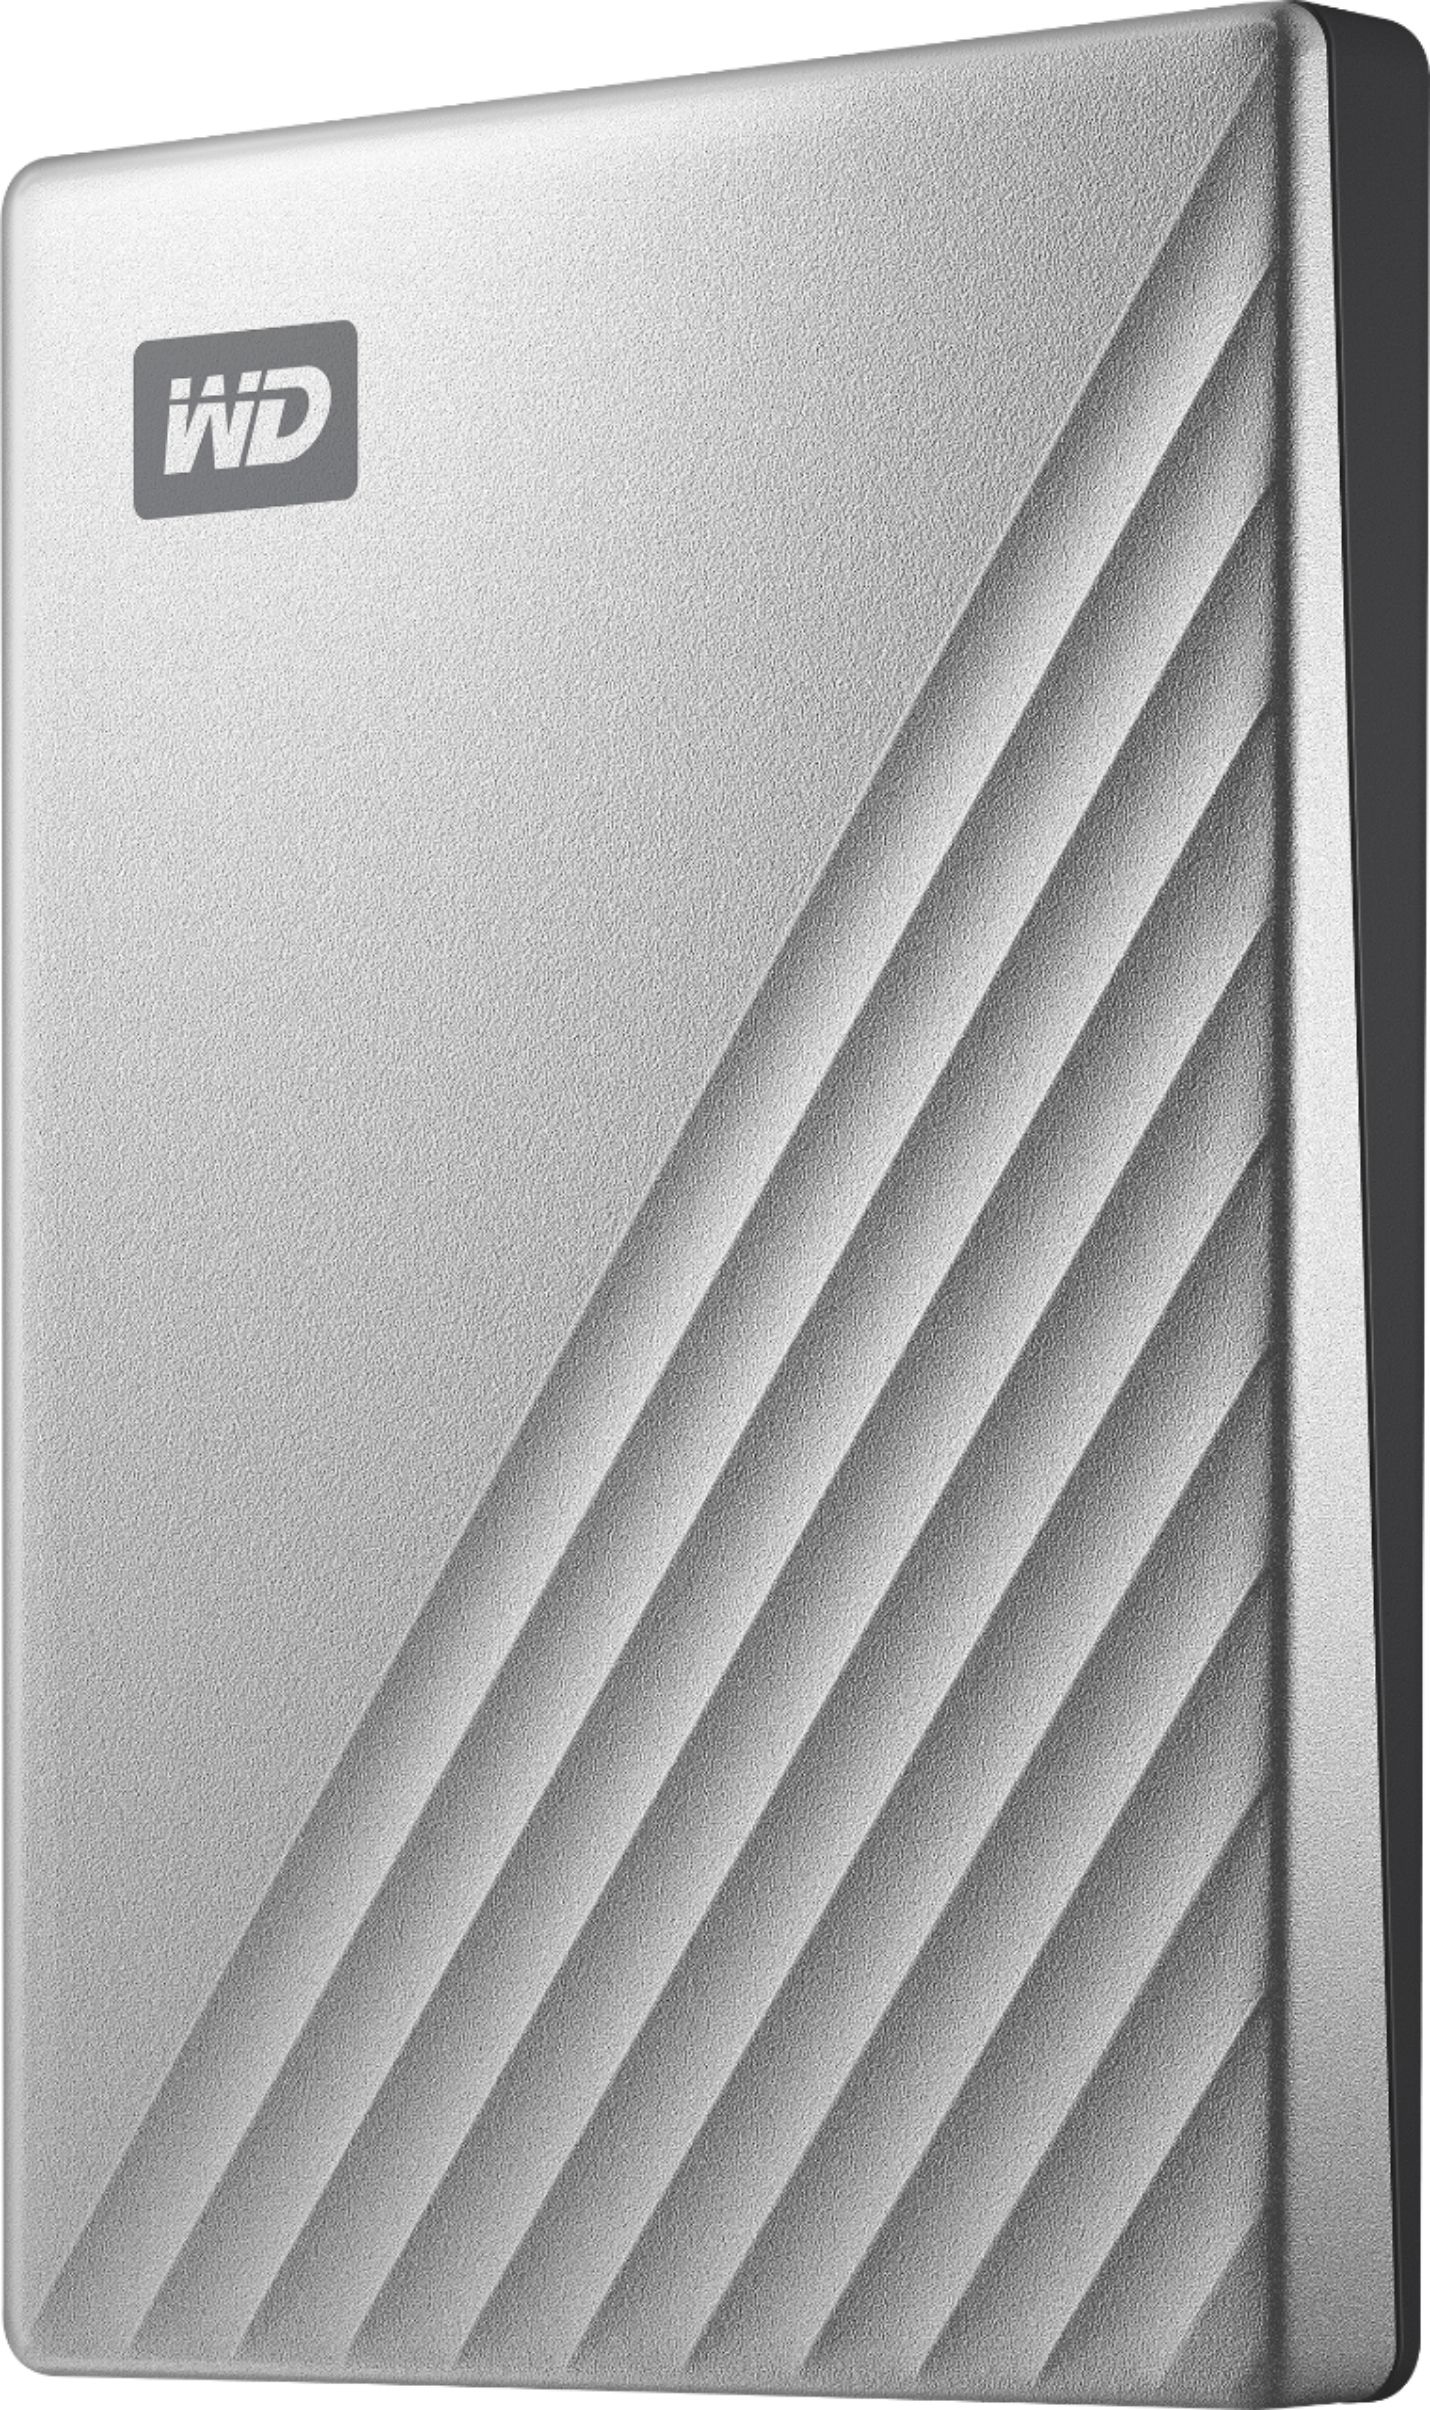 WD My Passport Ultra Mac 2TB External USB 3.0 Portable Hard Drive Silver WDBKYJ0020BSL-WESN Best Buy